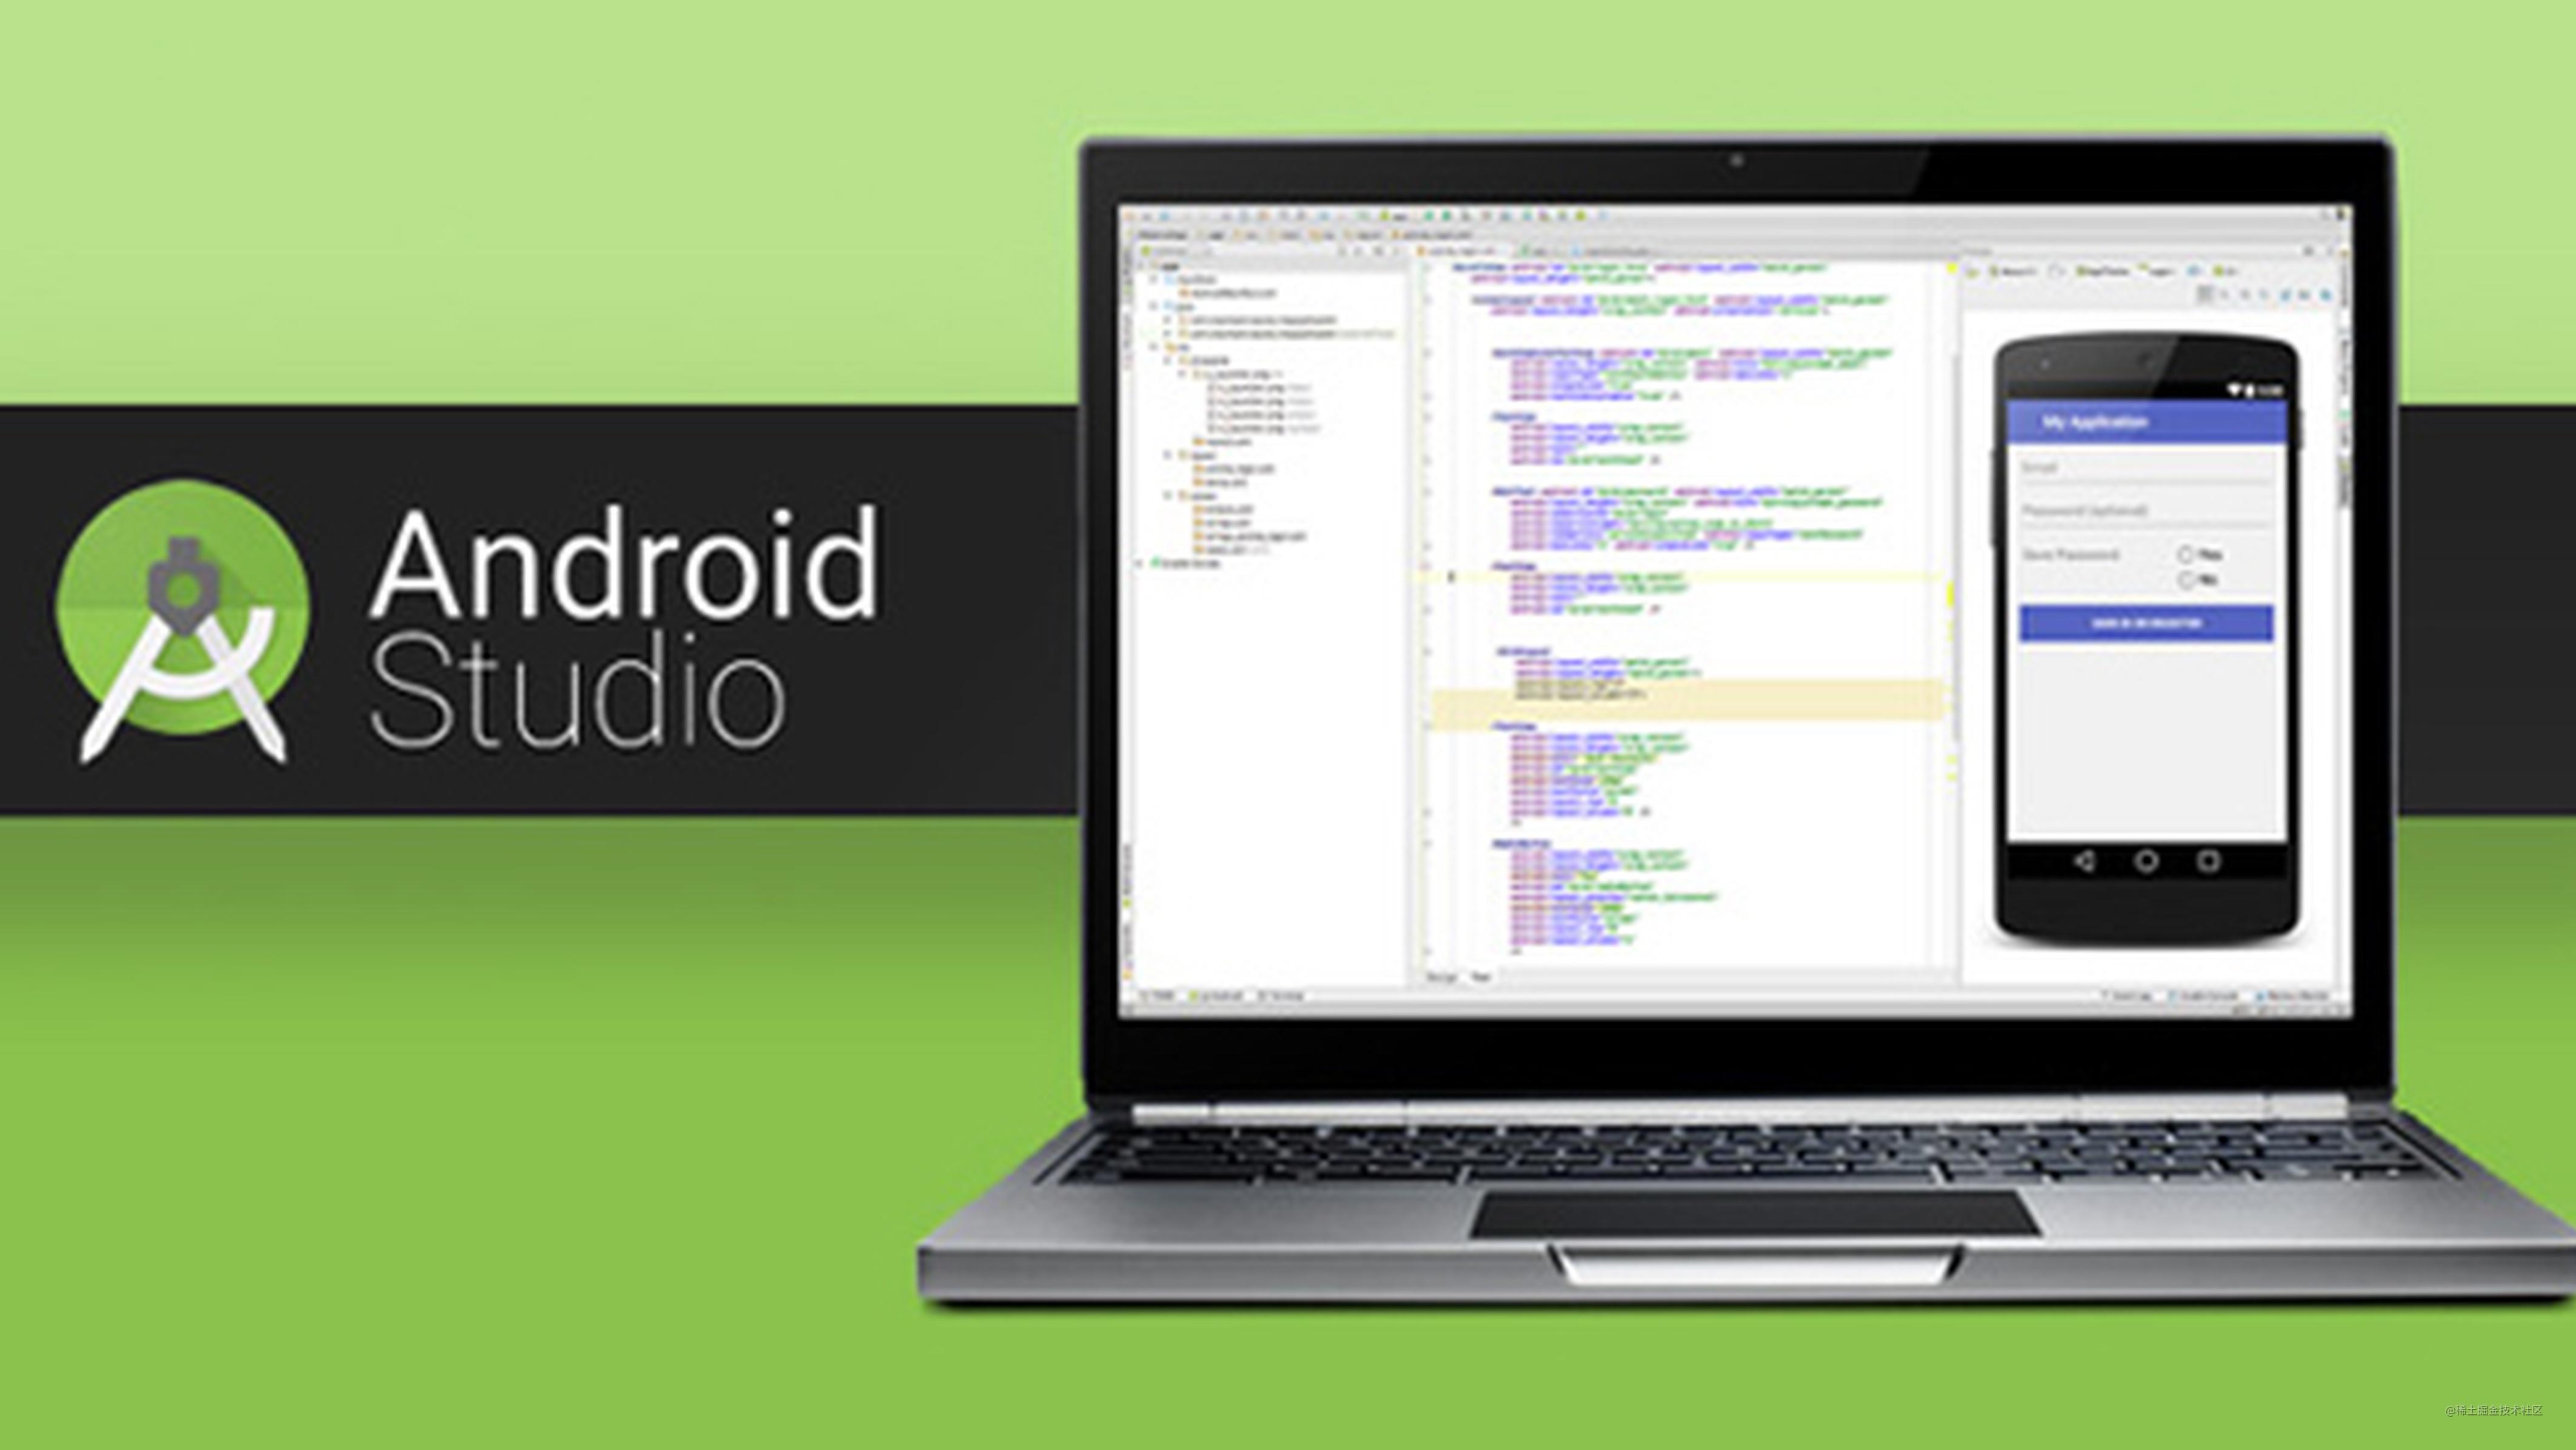 比较完整的 Android Studio 快捷小技巧